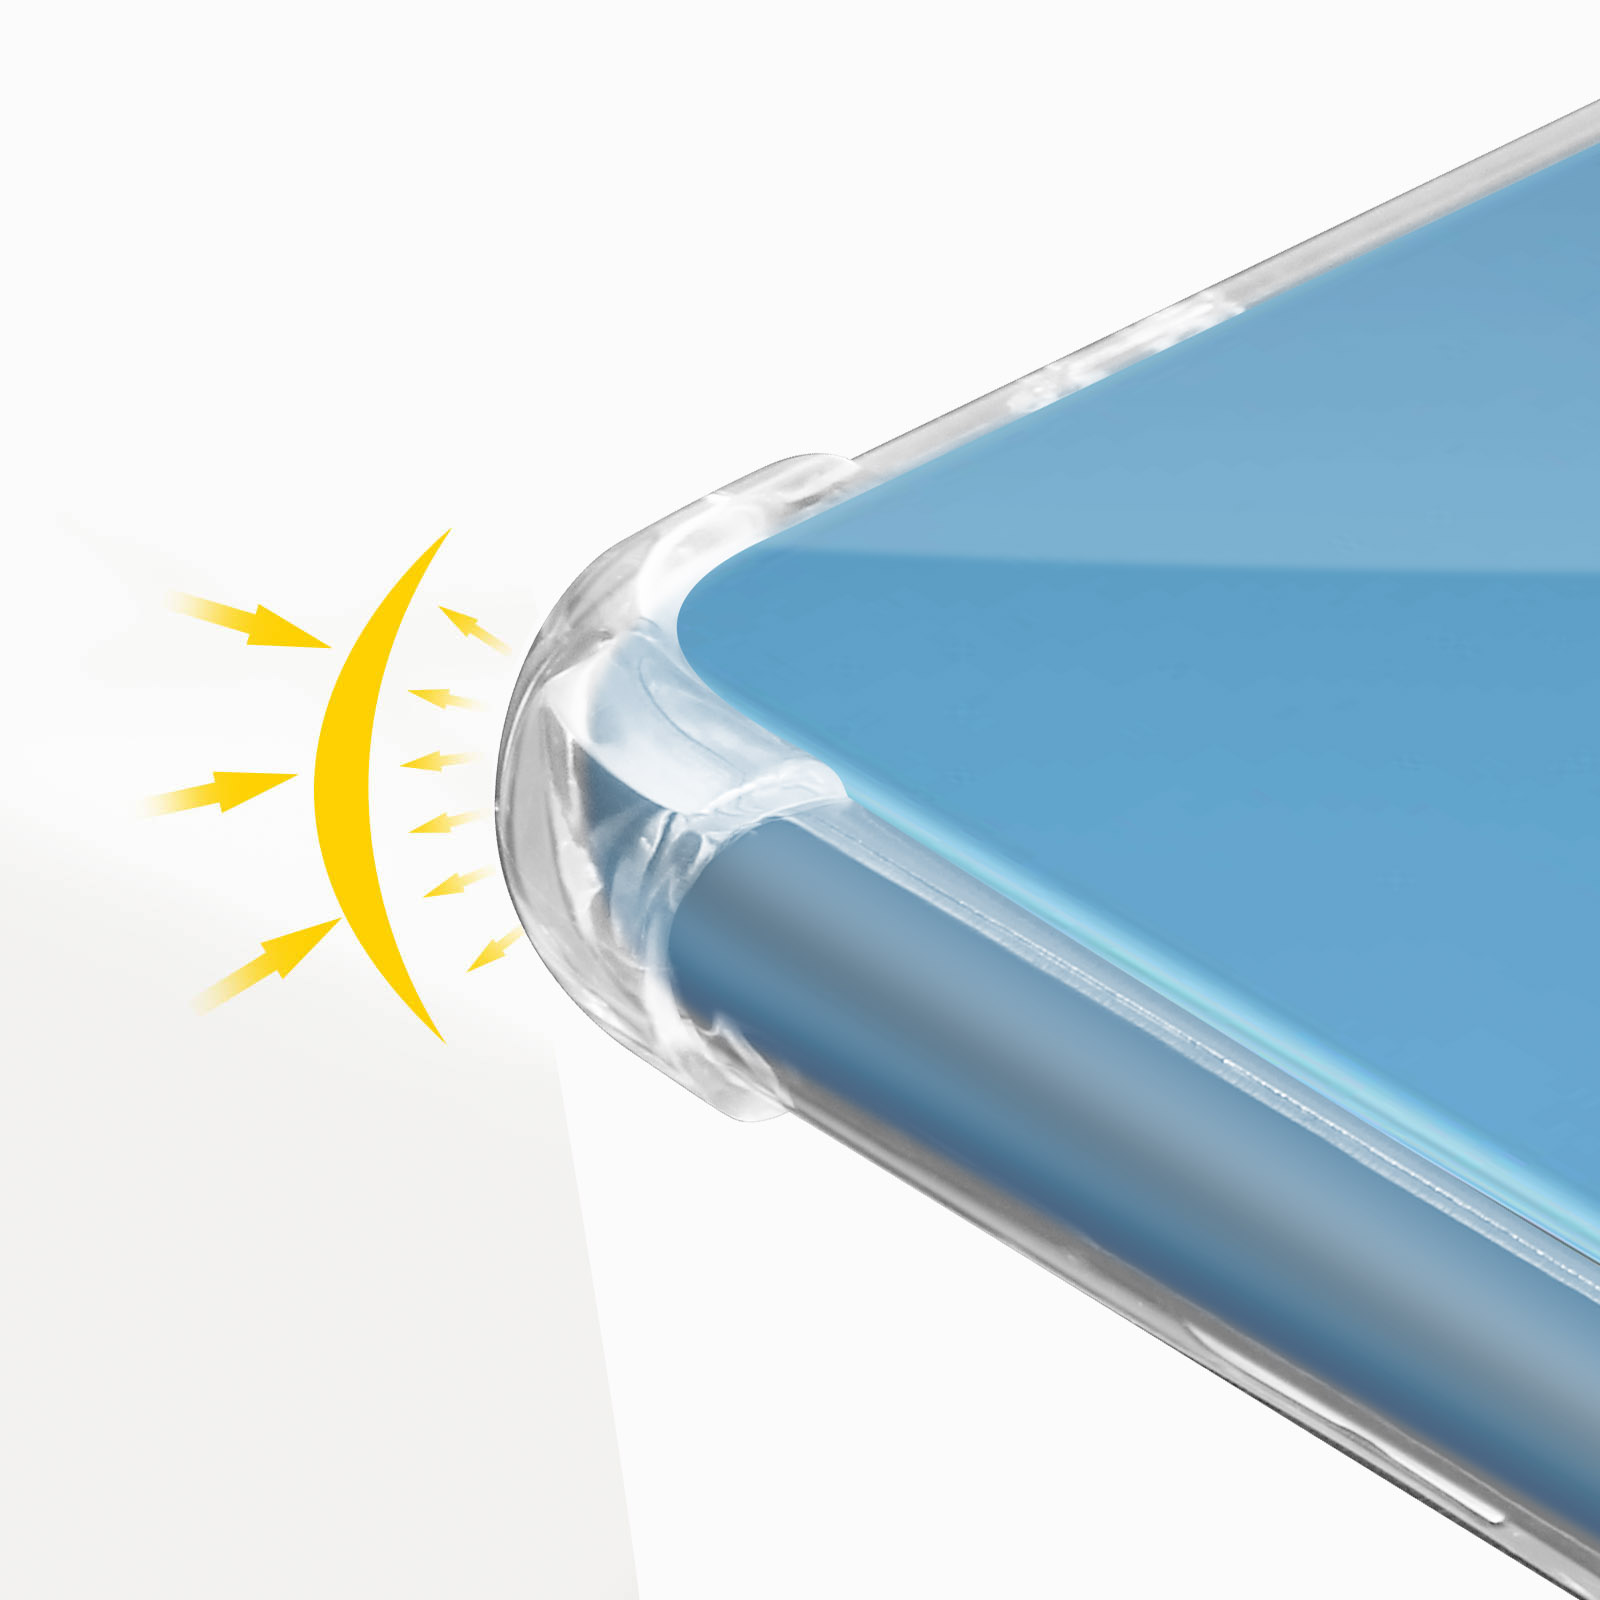 Refined Backcover, Galaxy Samsung, Transparent A72, Series, AVIZAR